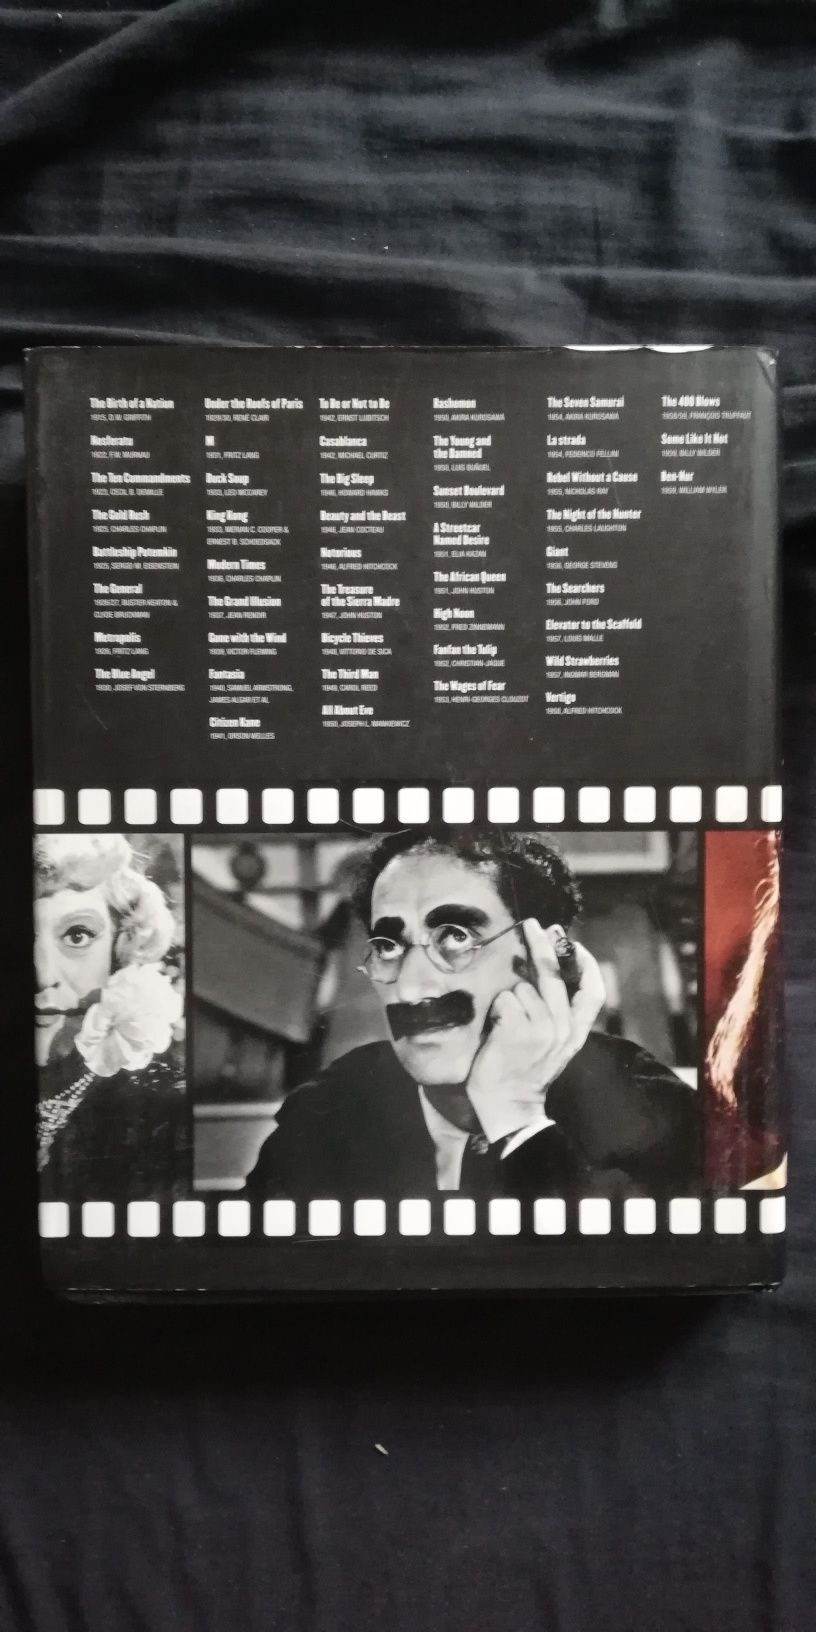 Livro "100 All-Time Favorite Movies" da Taschen (portes grátis)